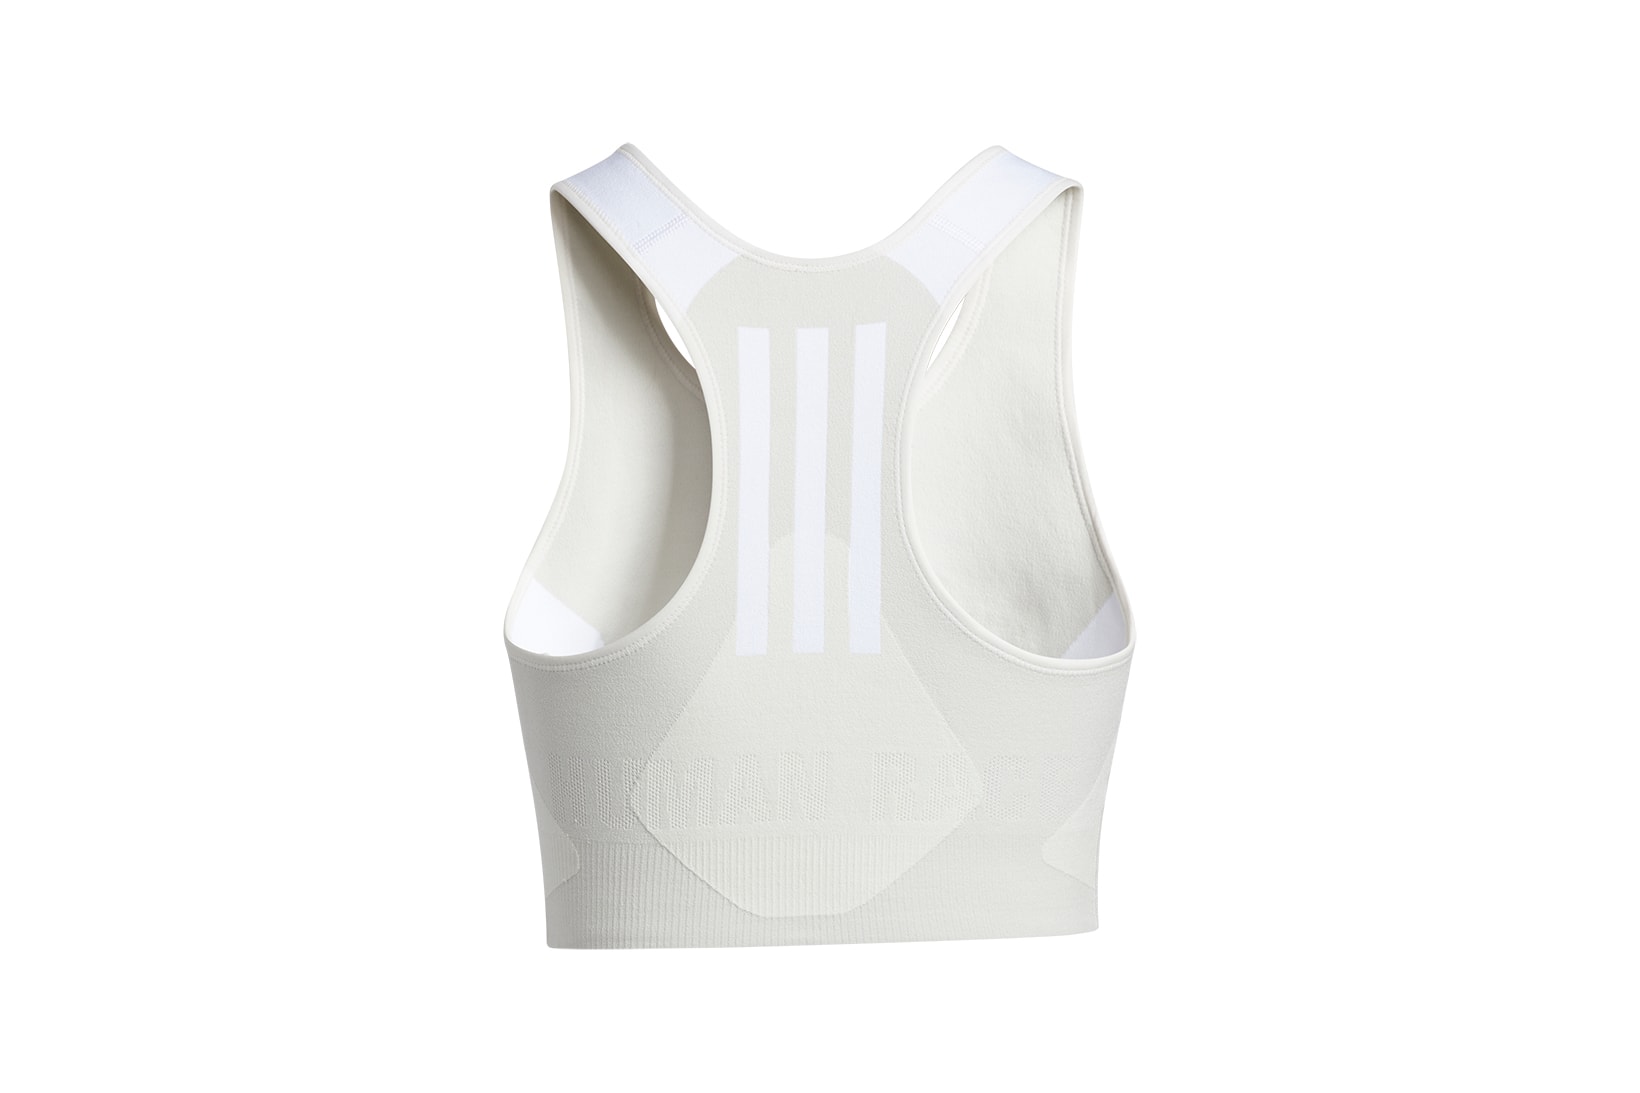 adidas pharrell williams pw primeknit fine collaboration activewear white tank top sports bra